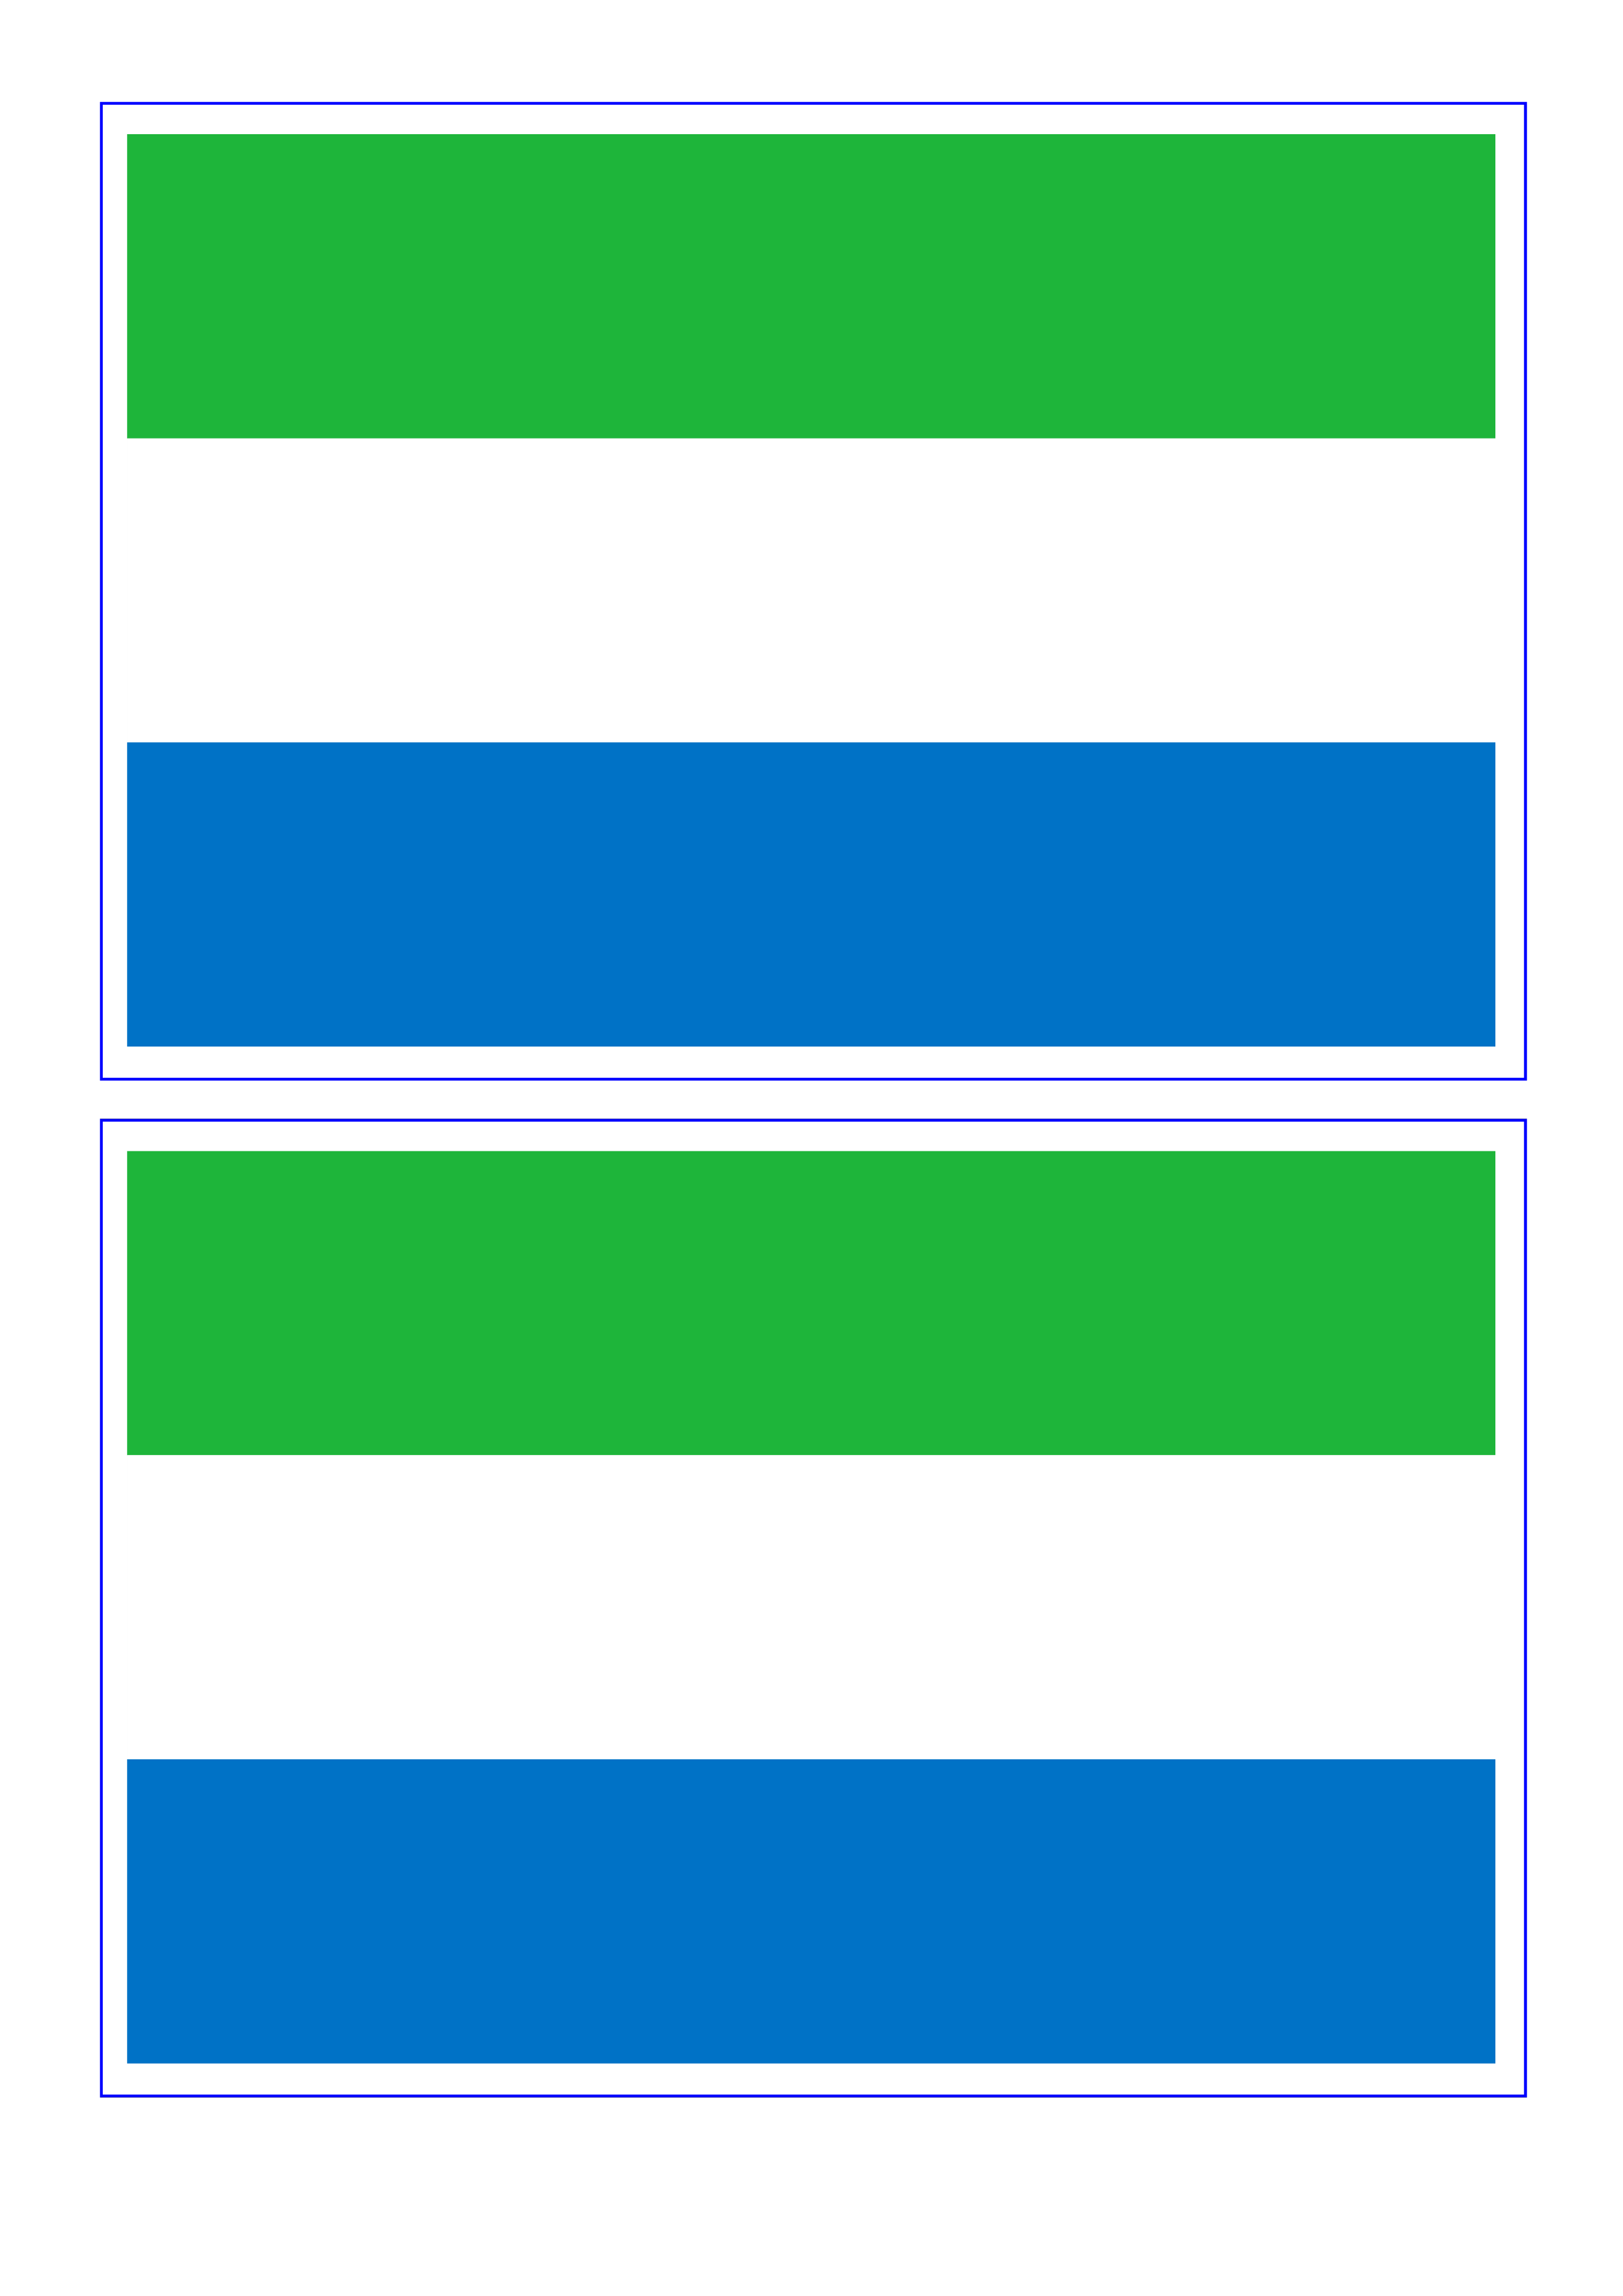 Sierra Leone Flag main image